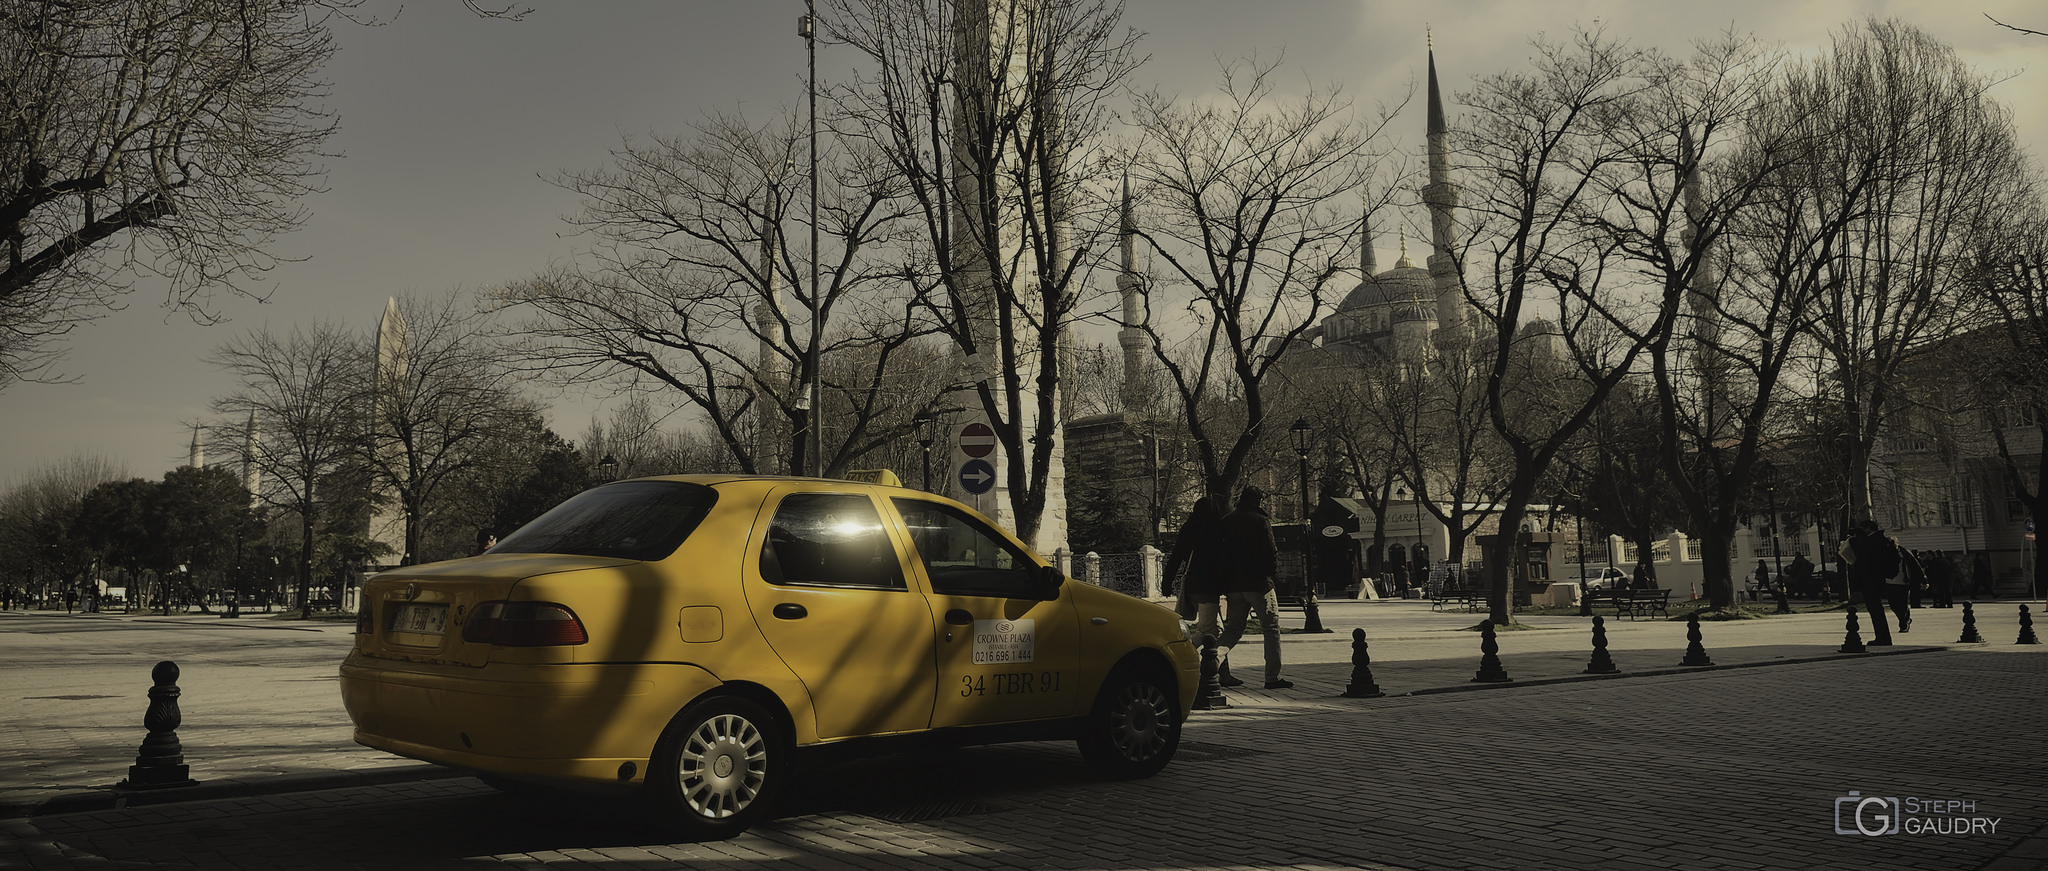 Renkler, sarı taksi ve Sultanahmet Camii [sinemaskop] [Click to start slideshow]